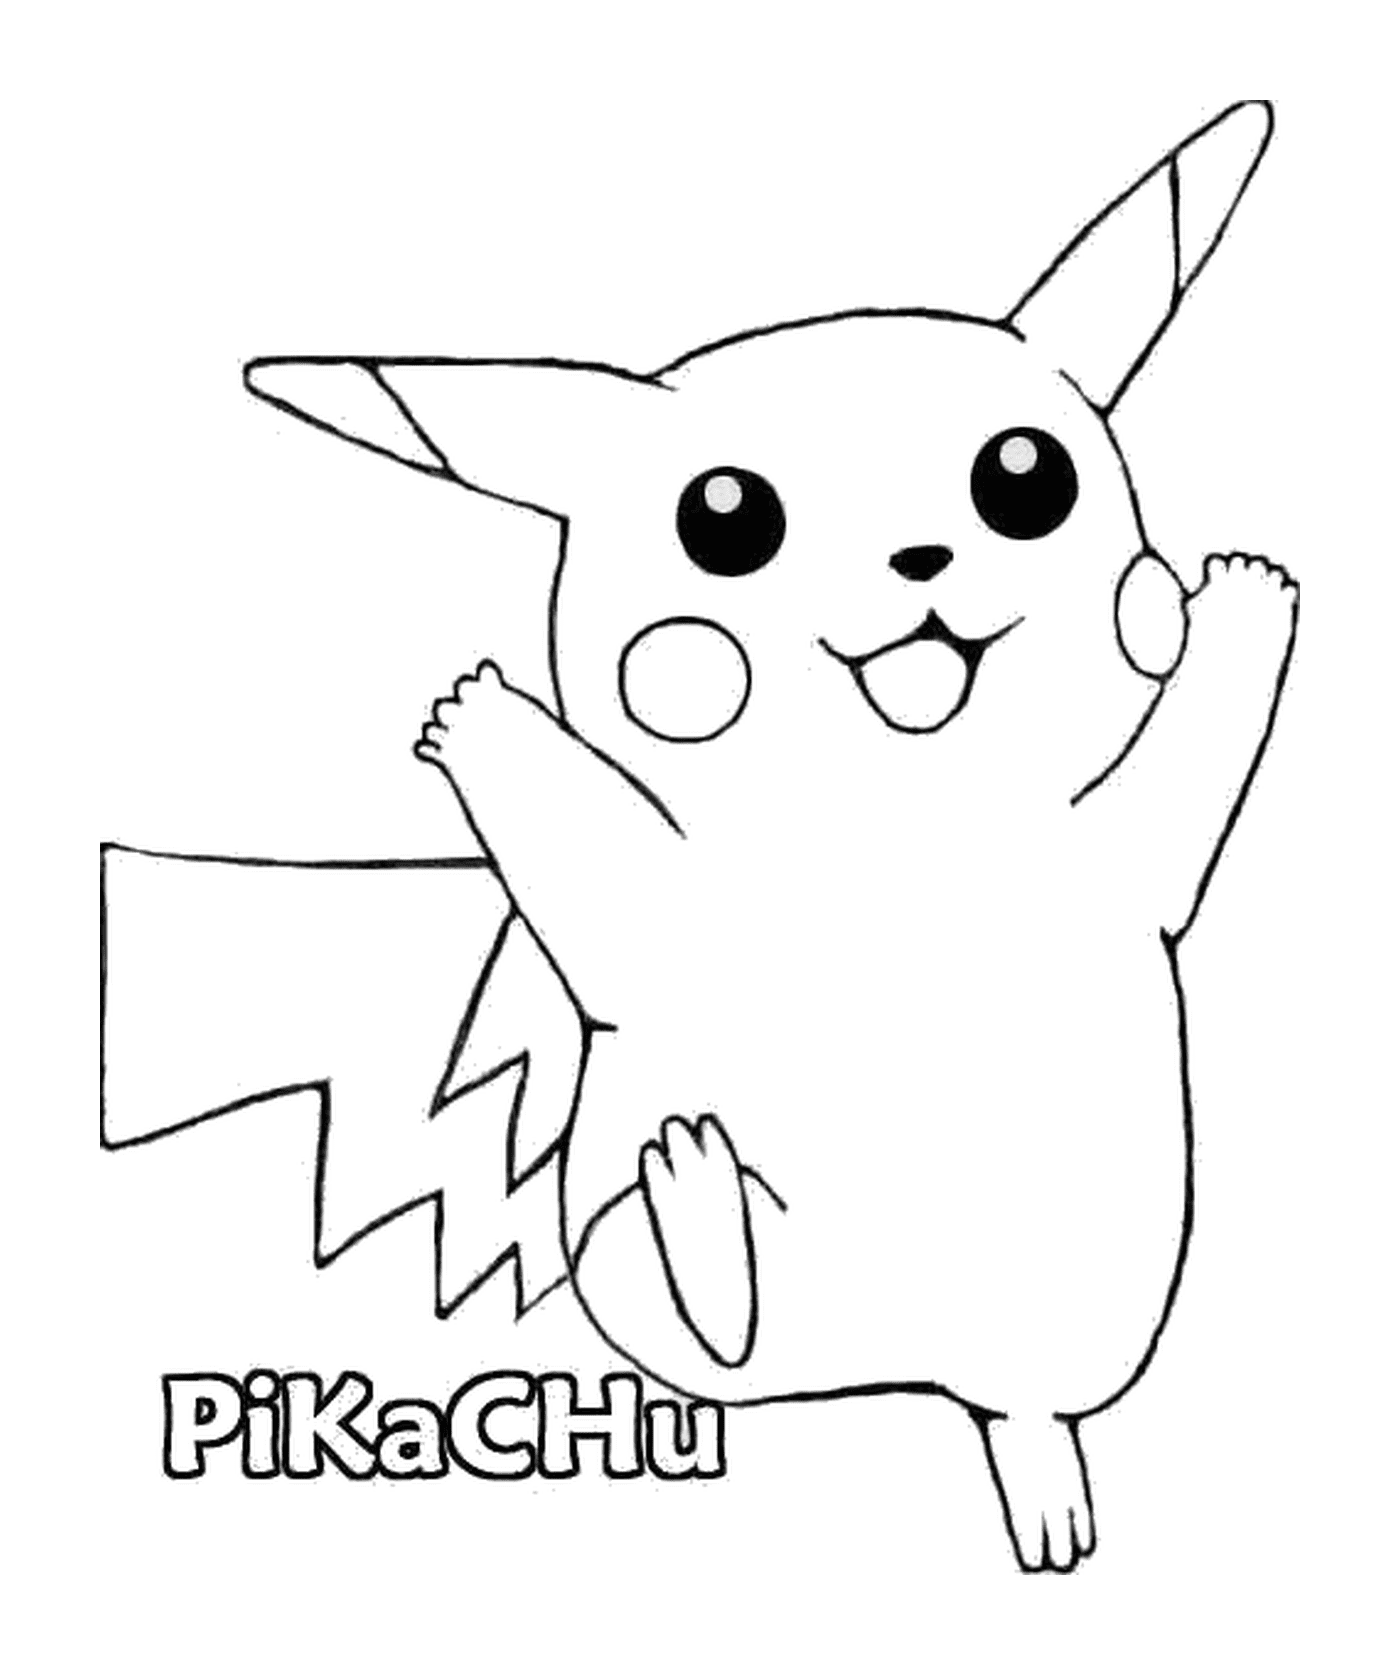  Pikachu : Liebenswert elektrische Maus 